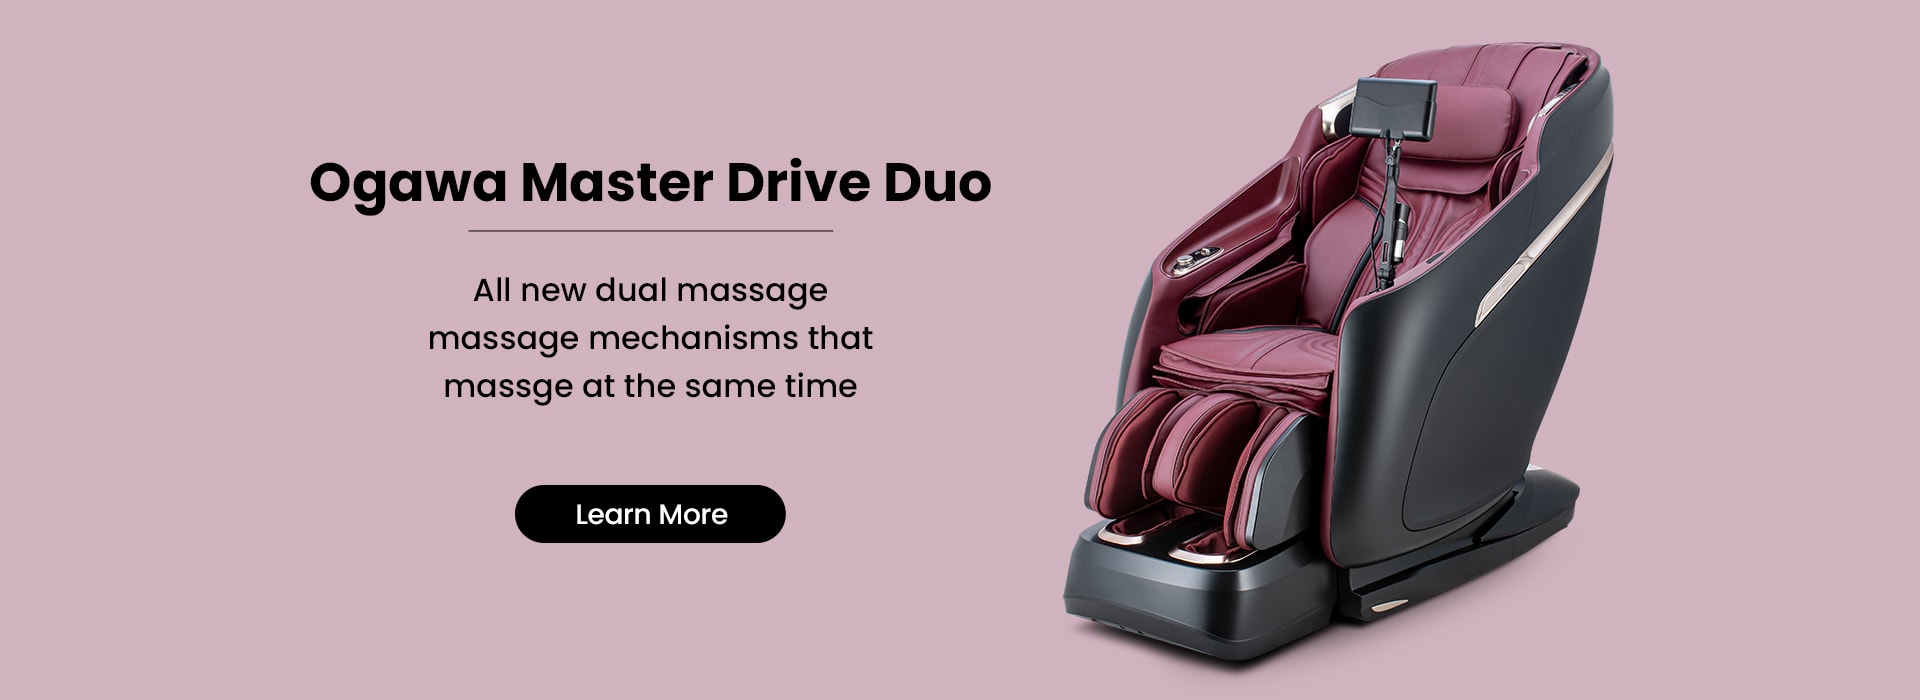 Ogawa Master Drive DUO Massage Chair1621243260e1af0c20-1